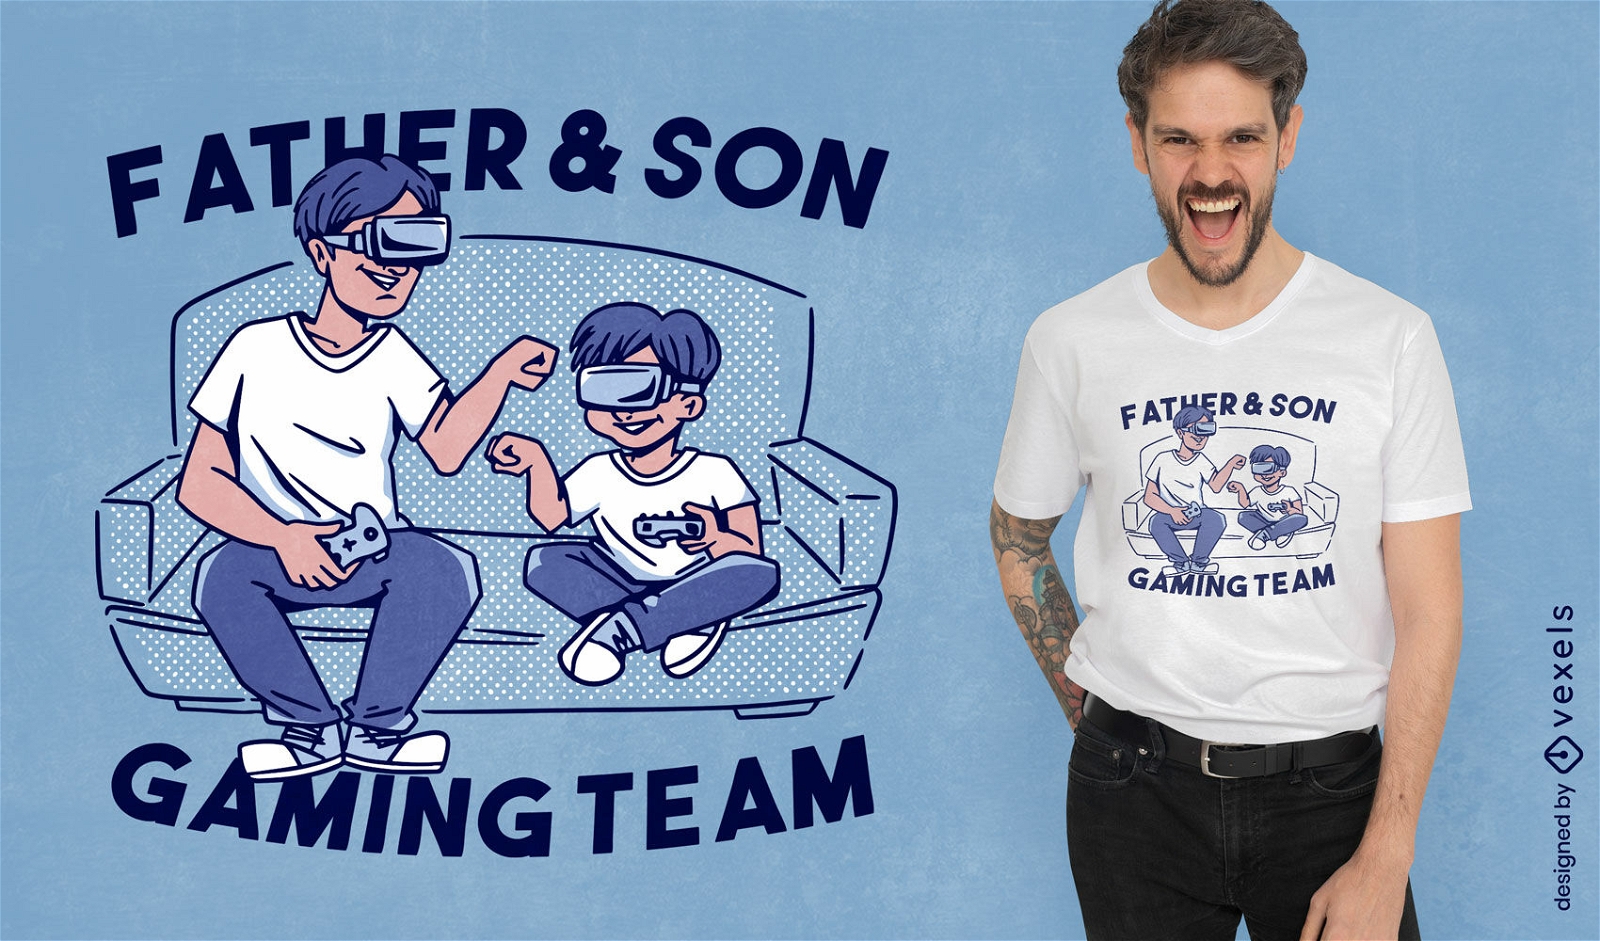 Diseño de camiseta de padre e hijo jugando videojuegos.